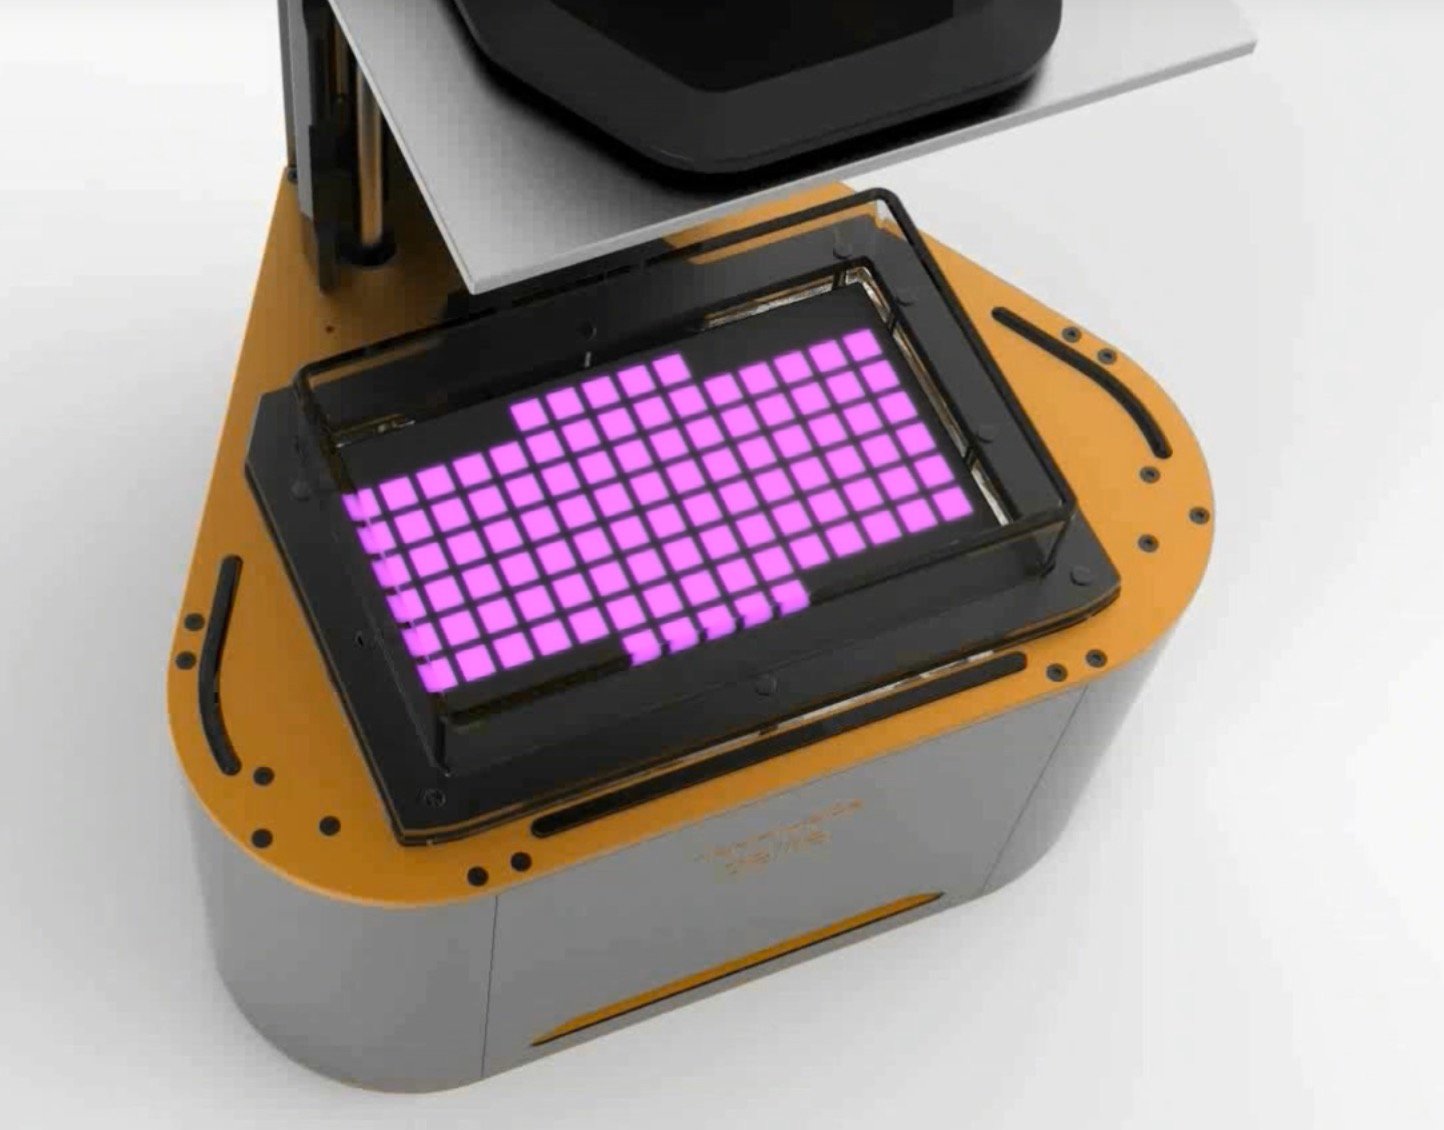  The Morpheus Delta 3D printer showing its illumination system 